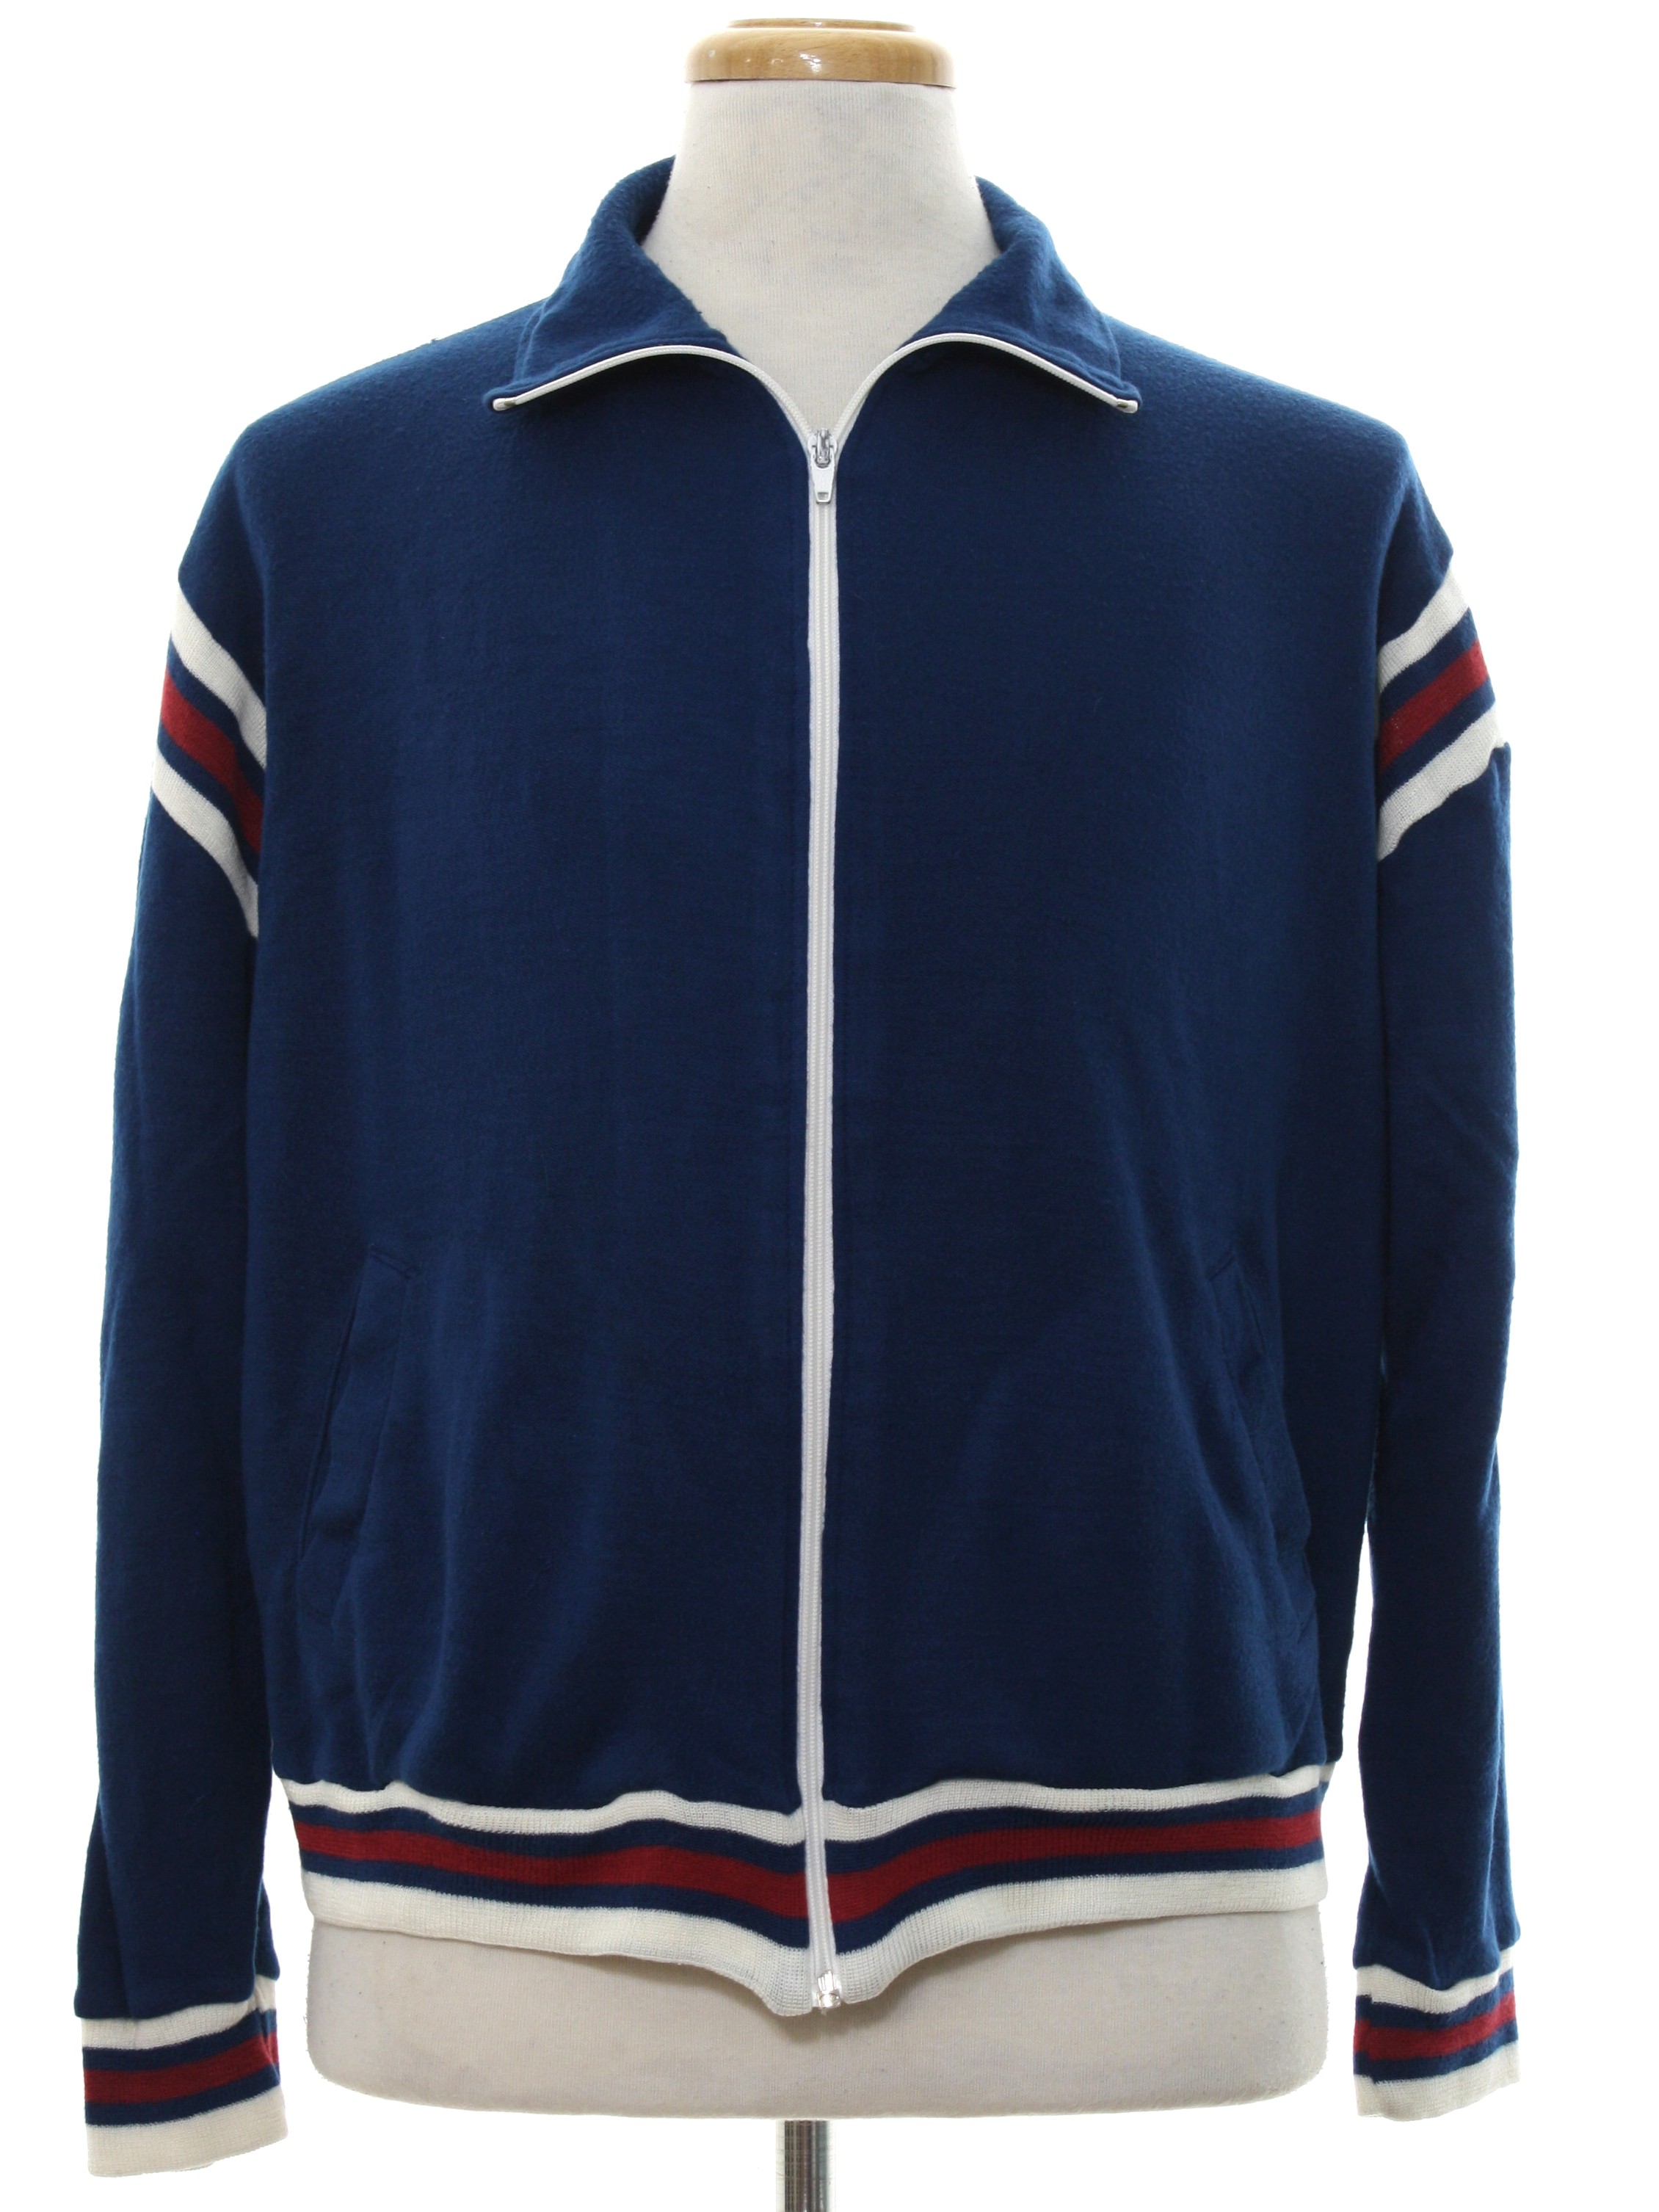 Retro Eighties Jacket: 80s -Winning Ways- Mens navy blue background ...